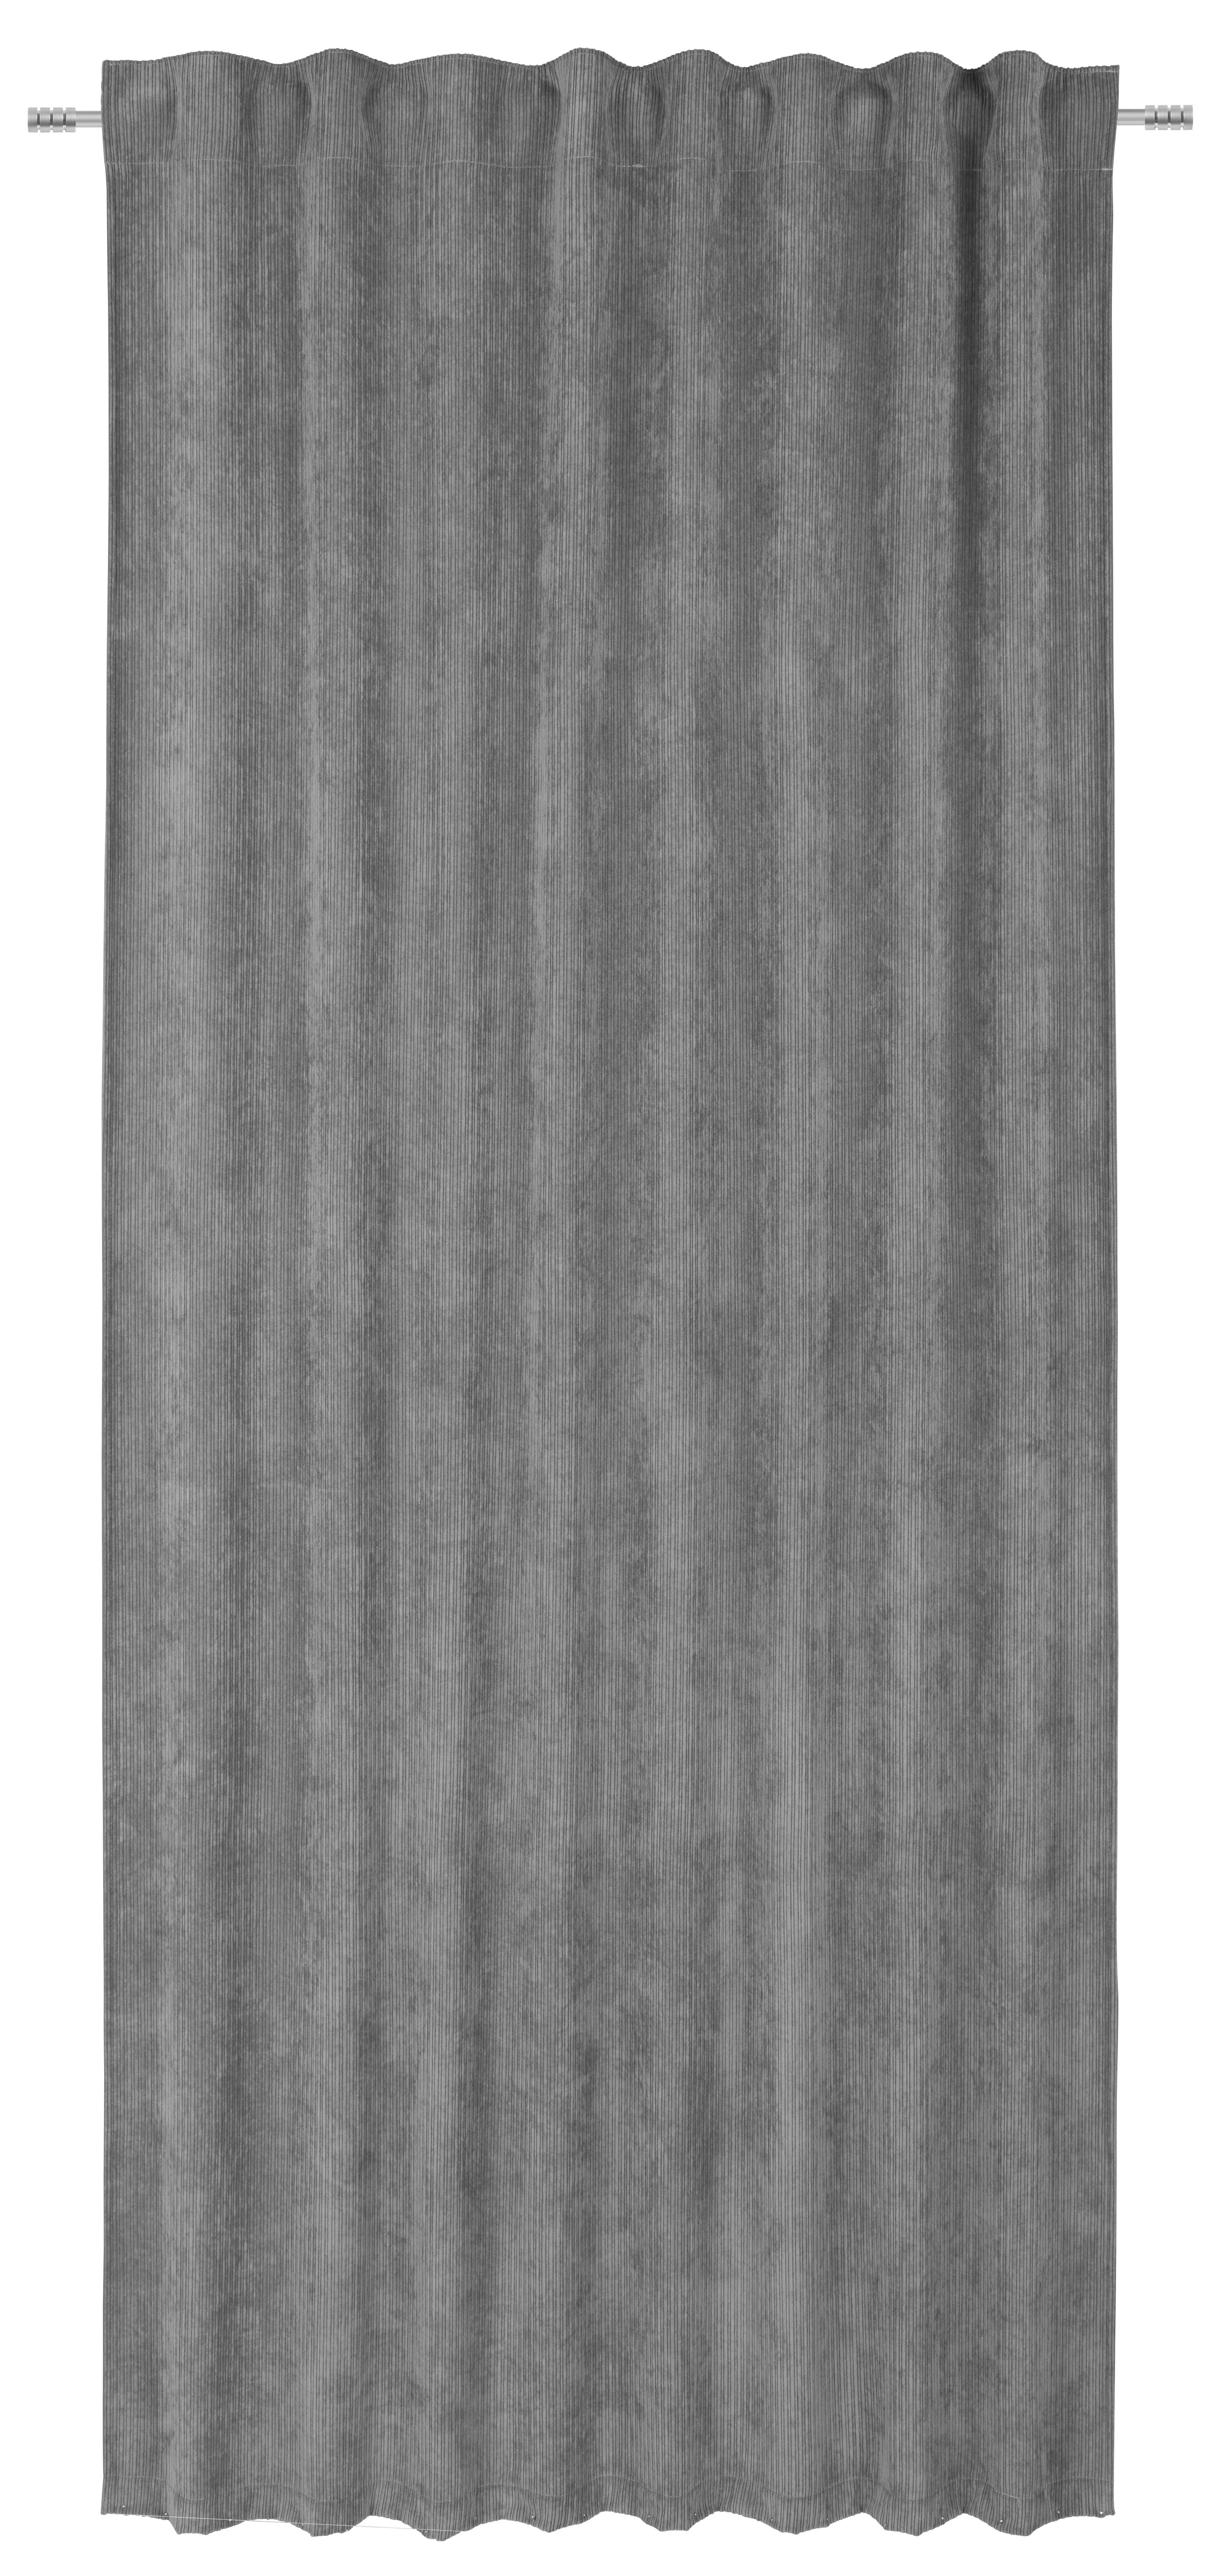 Fertigvorhang Corrinna in Grau ca. 135x245cm - Grau, MODERN, Textil (135/245cm) - Premium Living